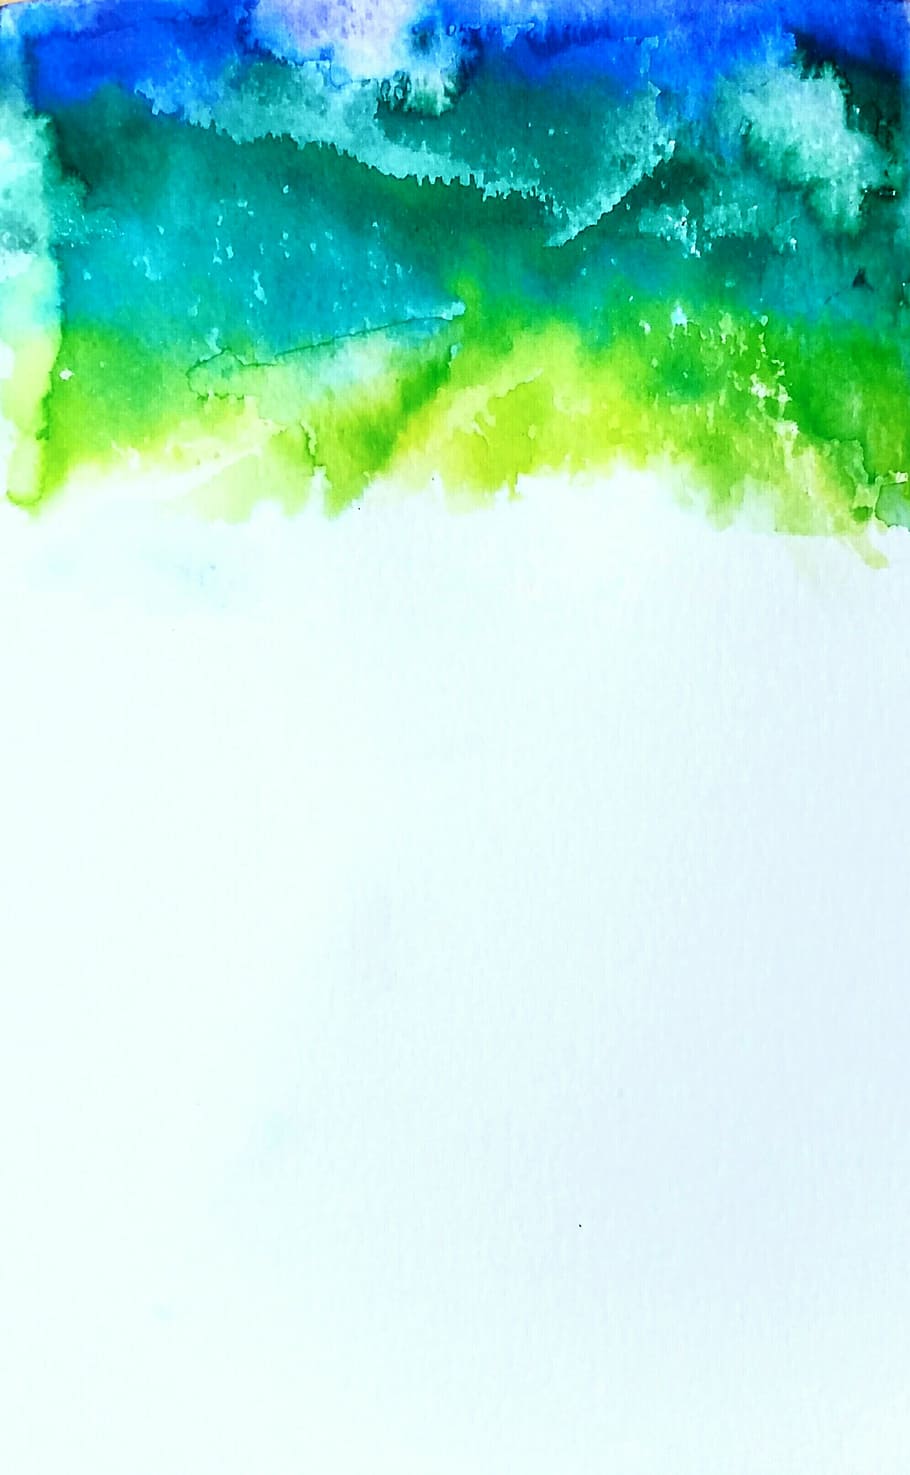 green, blue, teal, abstract, painting, watercolor, indigo, drip, splatter, texture